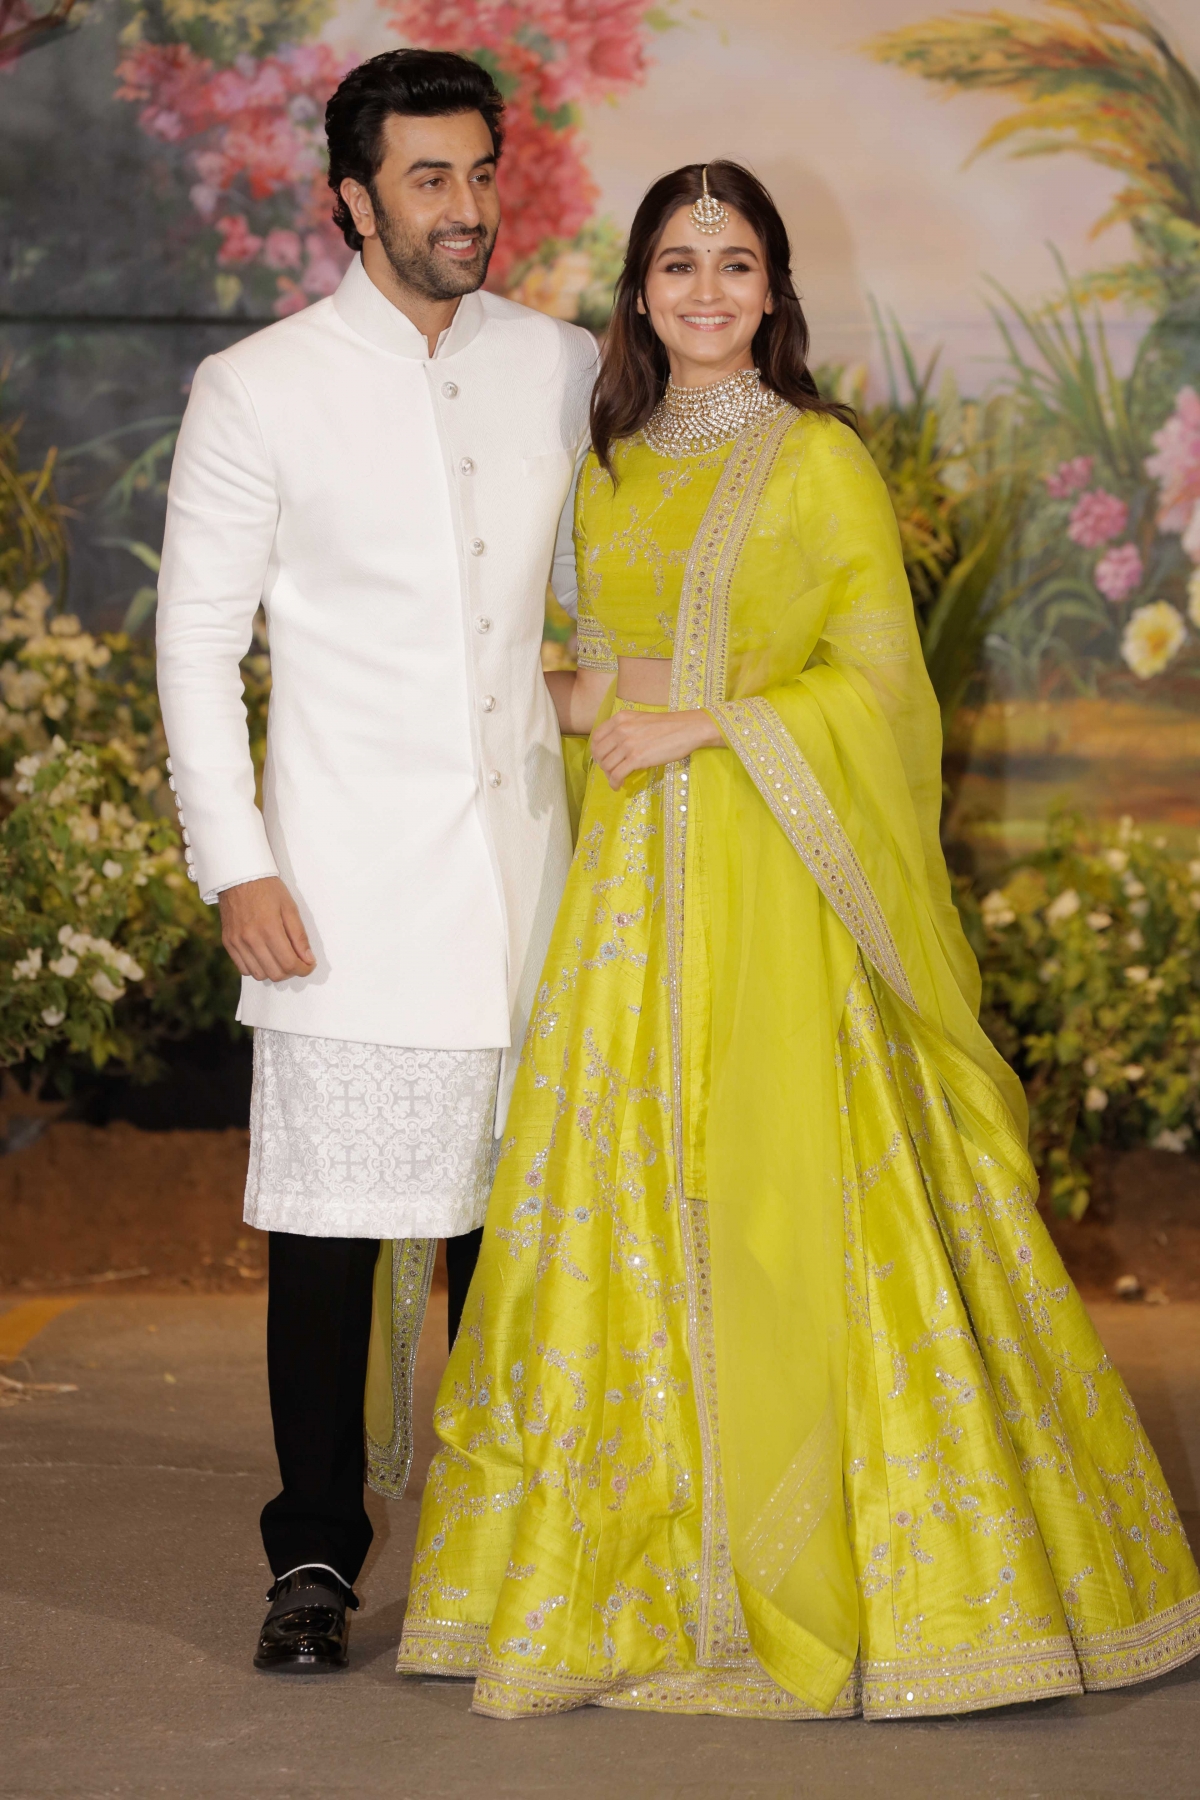 Alia Bhatt stuns in a white dress during dinner date with Ranbir Kapoor ...